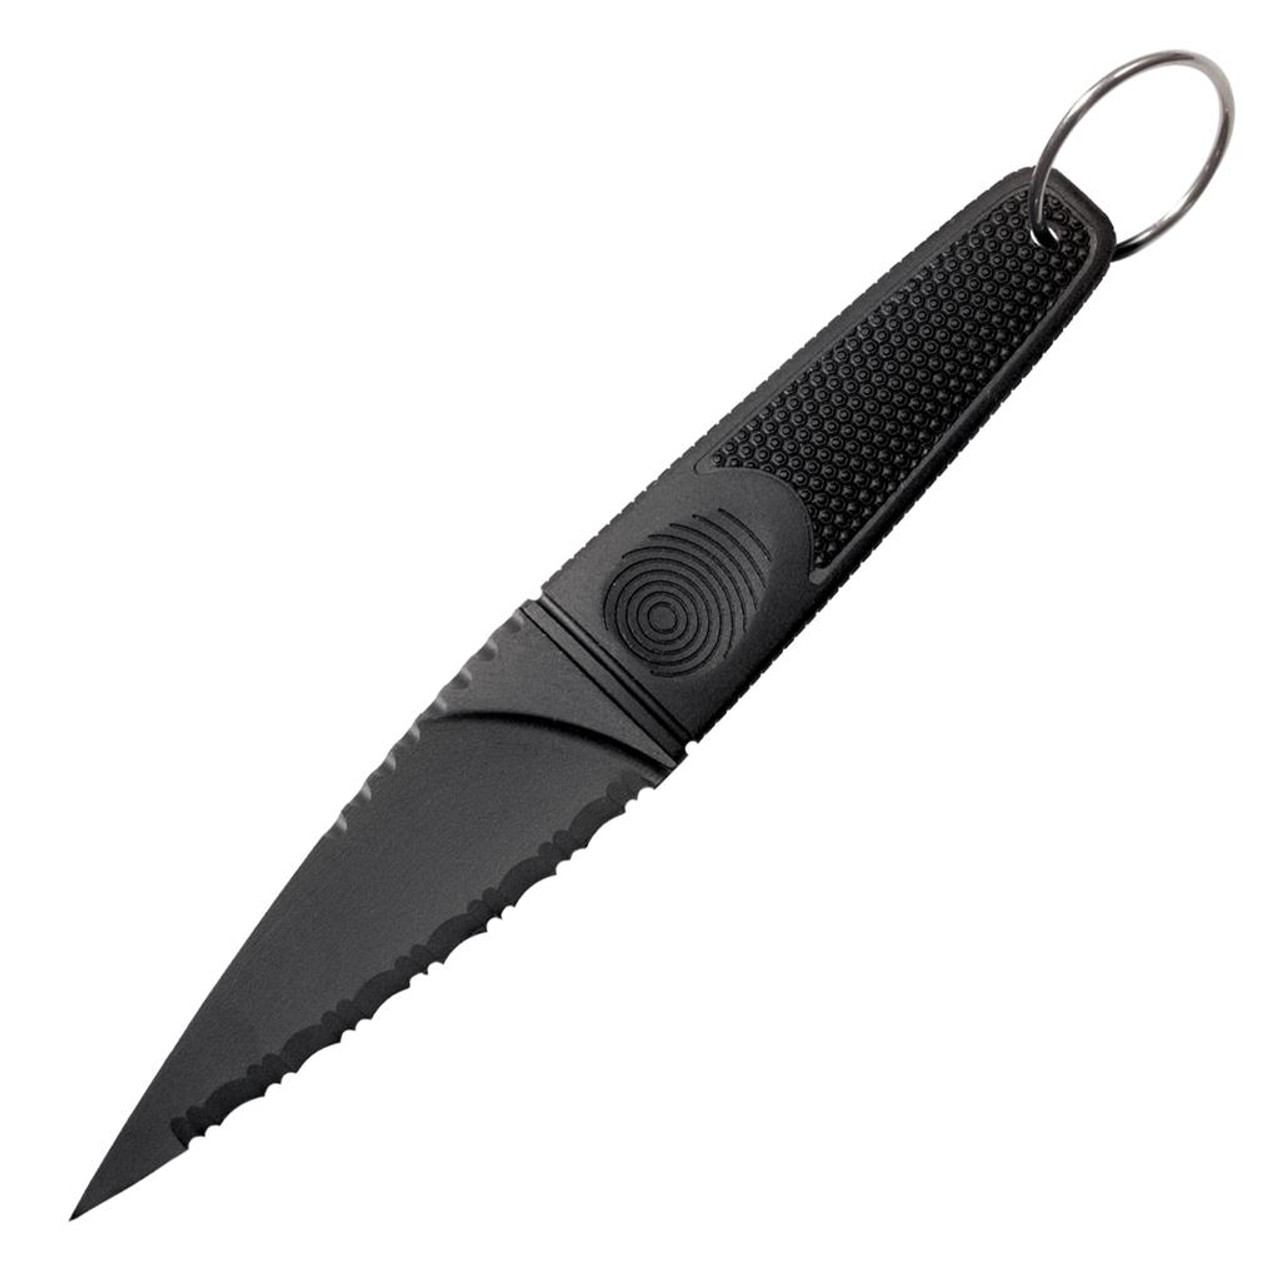 Home Blade knife kit - London x 5